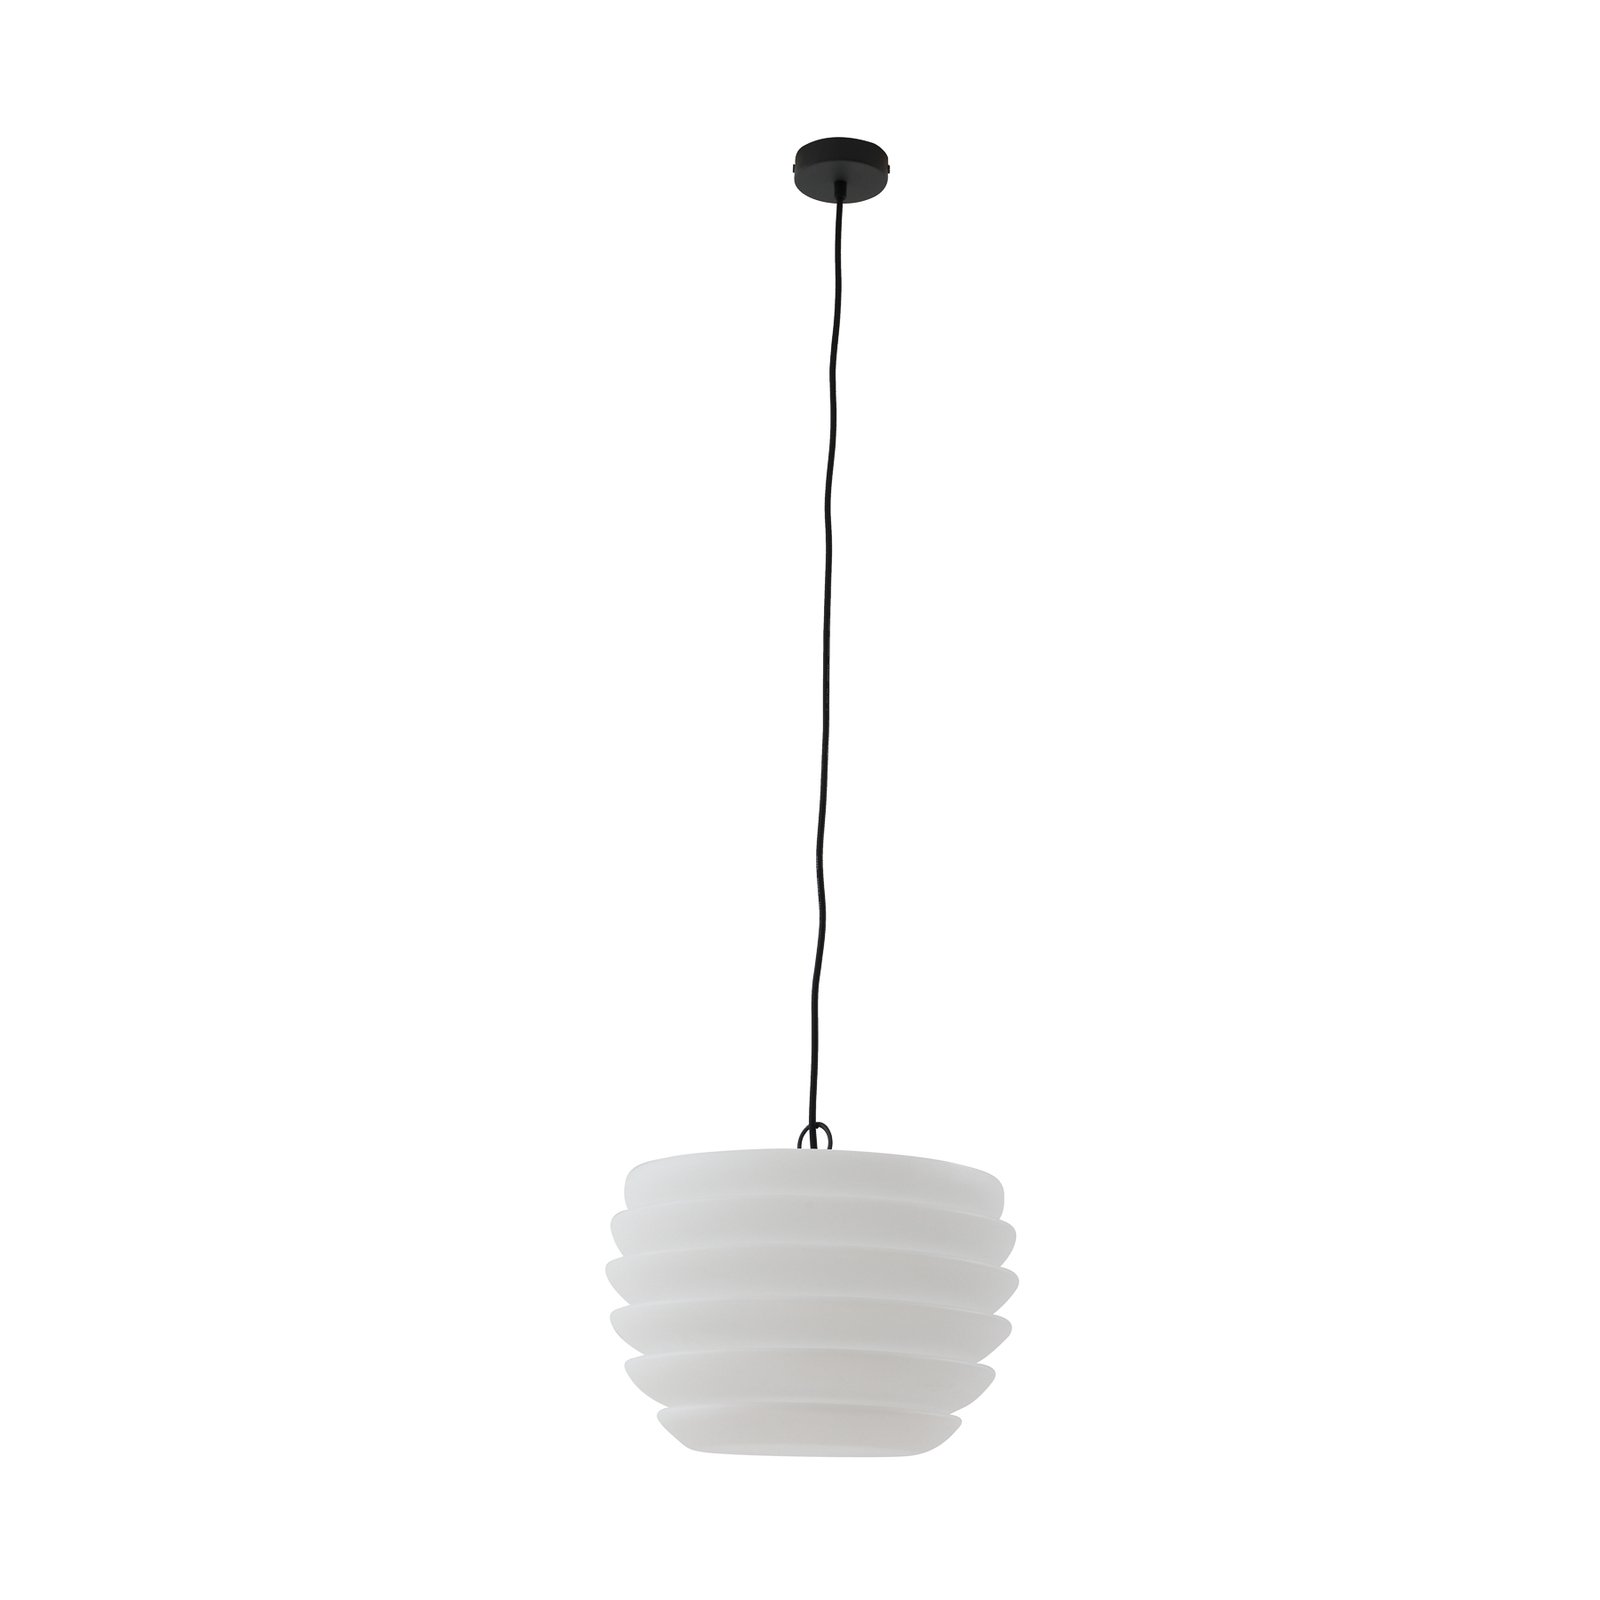 Lindby Arona outdoor hanging light, Ø 38 cm, white